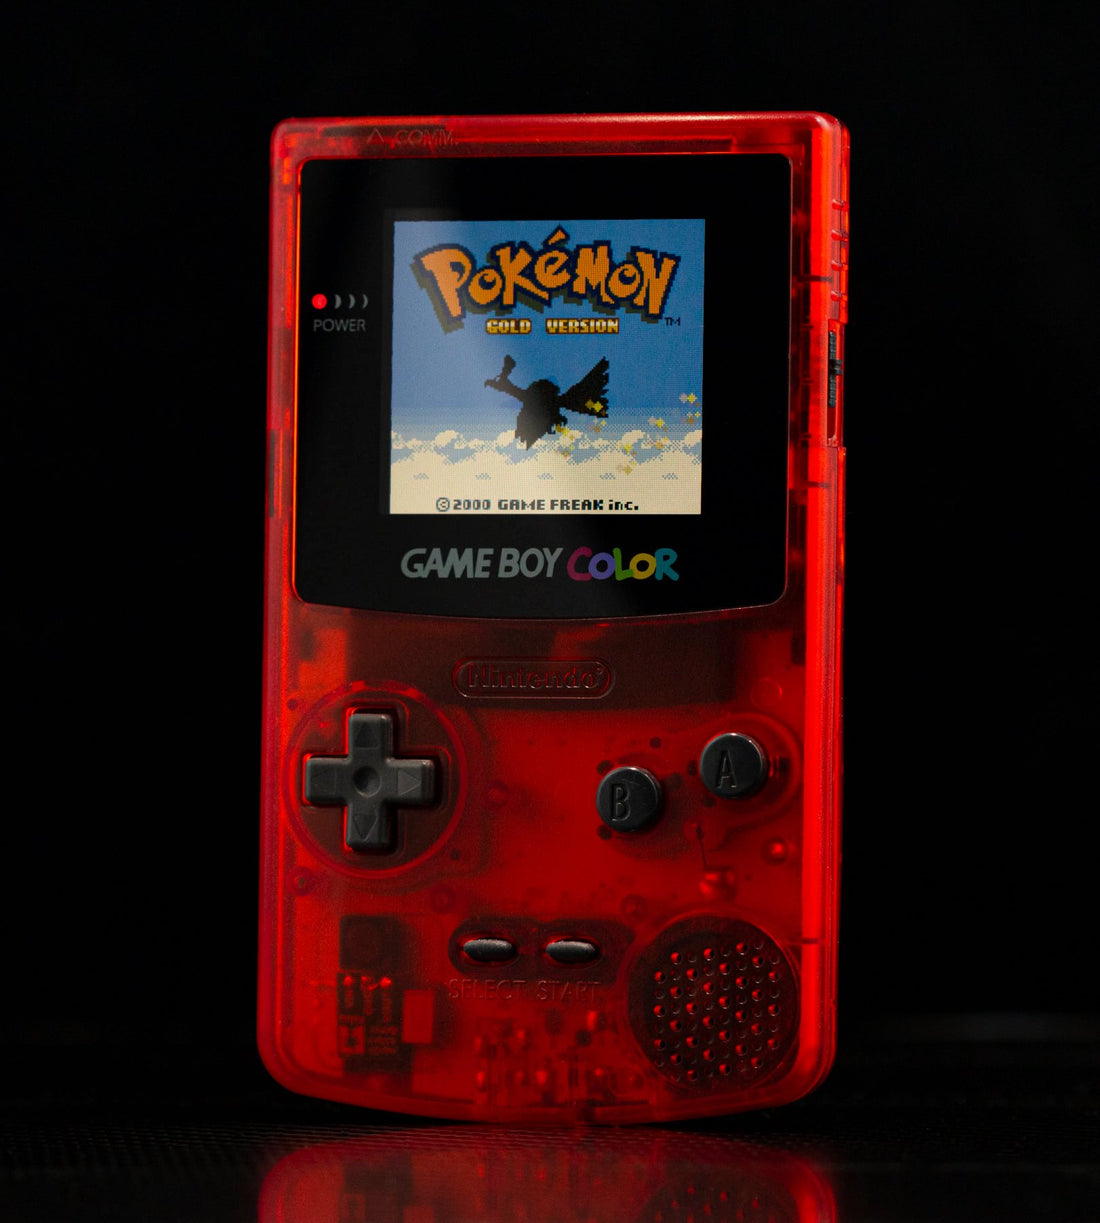 A back-lit Gameboy Color displaying Pokemon Gold